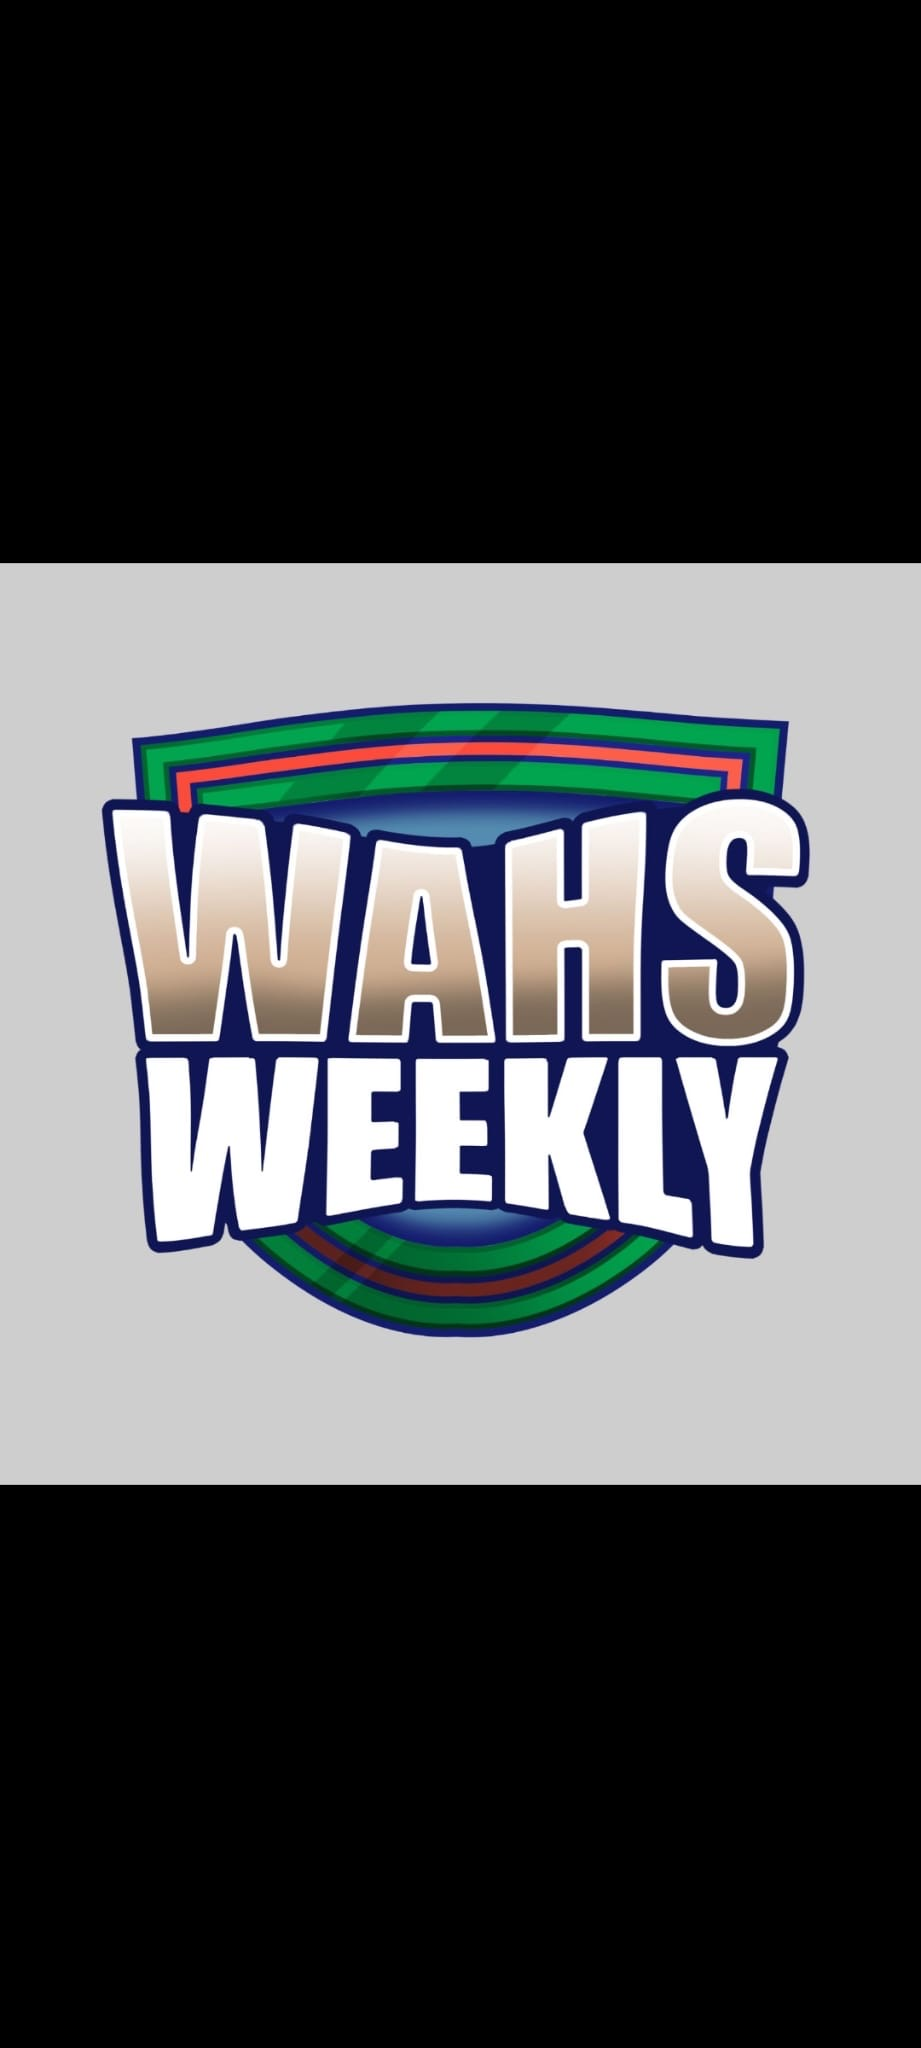 Wahs Weekly - Episode 17 (Talking League)